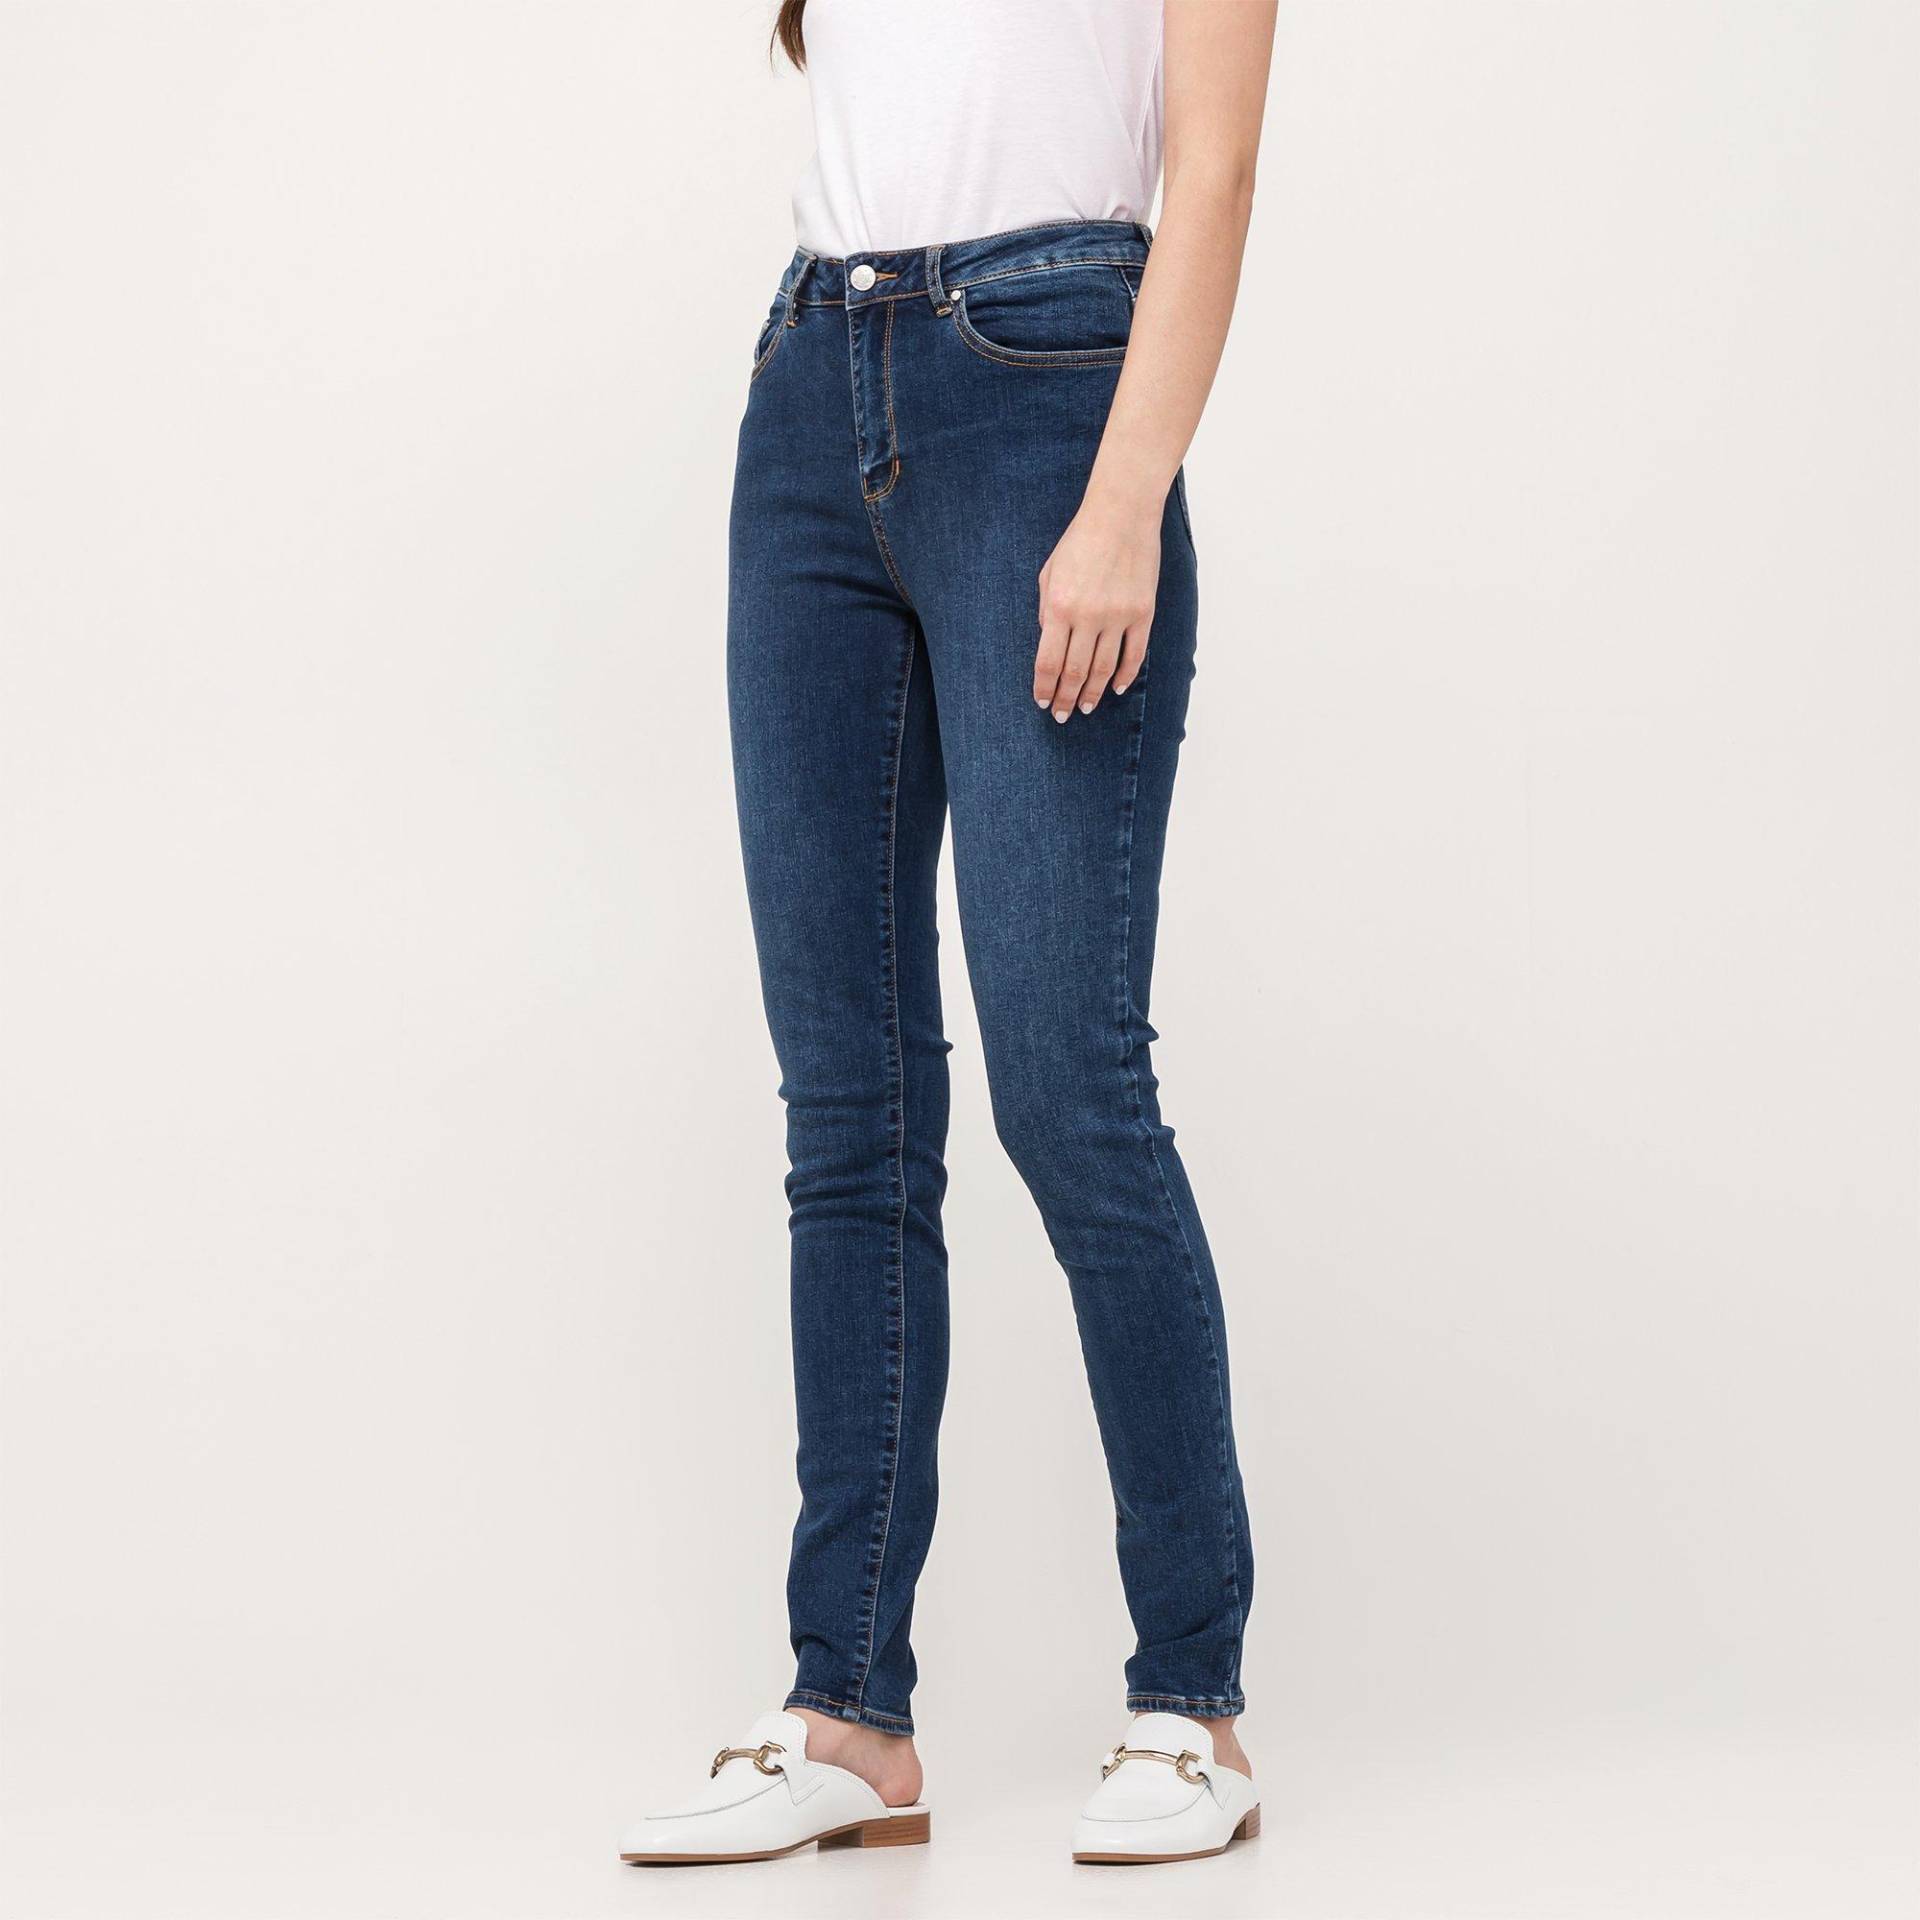 Jeans, Slim Fit Damen Blau Denim L32/W44 von Manor Woman